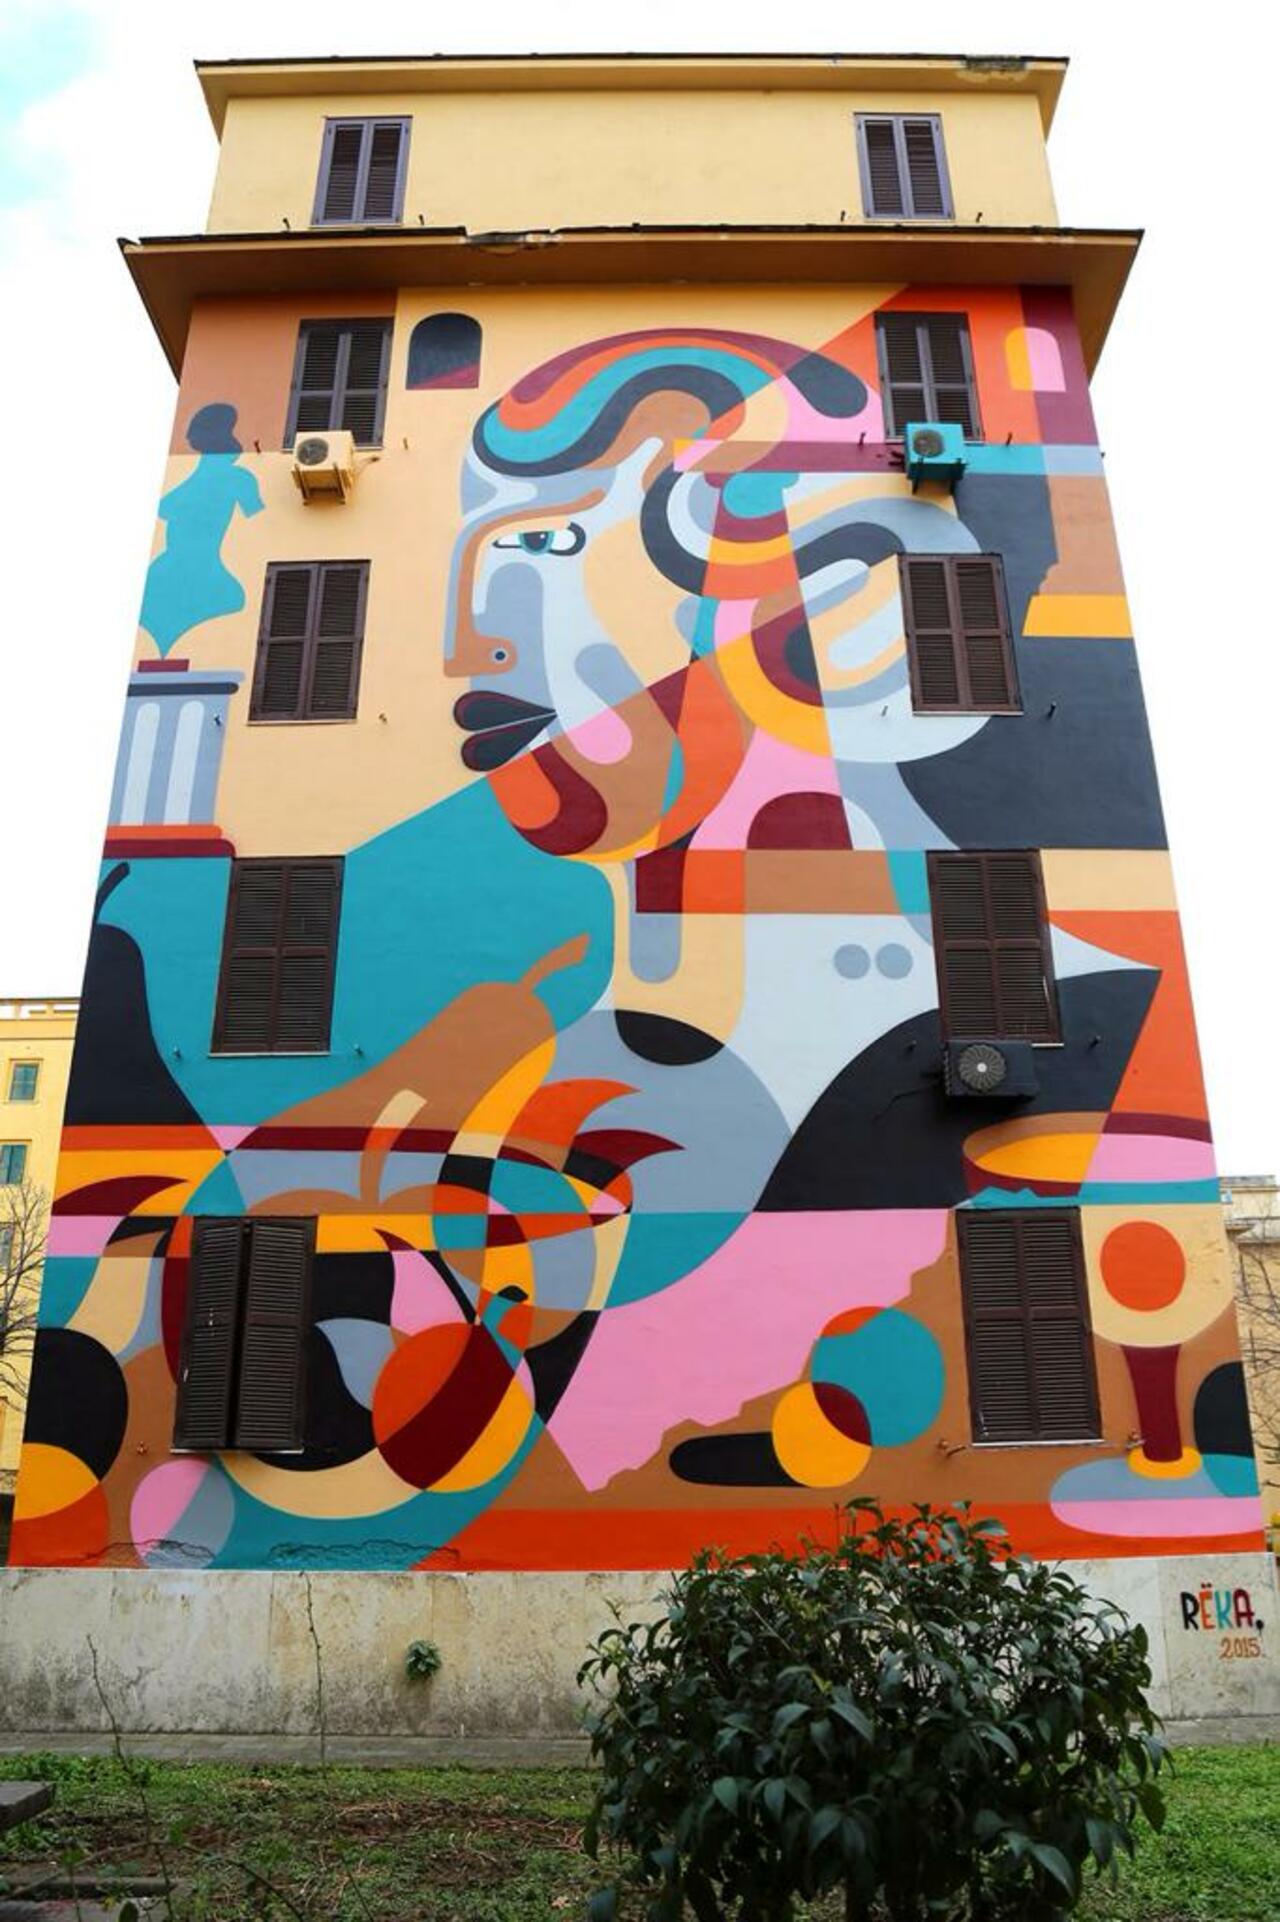 Streetart by Reka in Rome, Italy

#streetart #mural #urbanart #art #graffiti http://t.co/TKv1jiDvQx